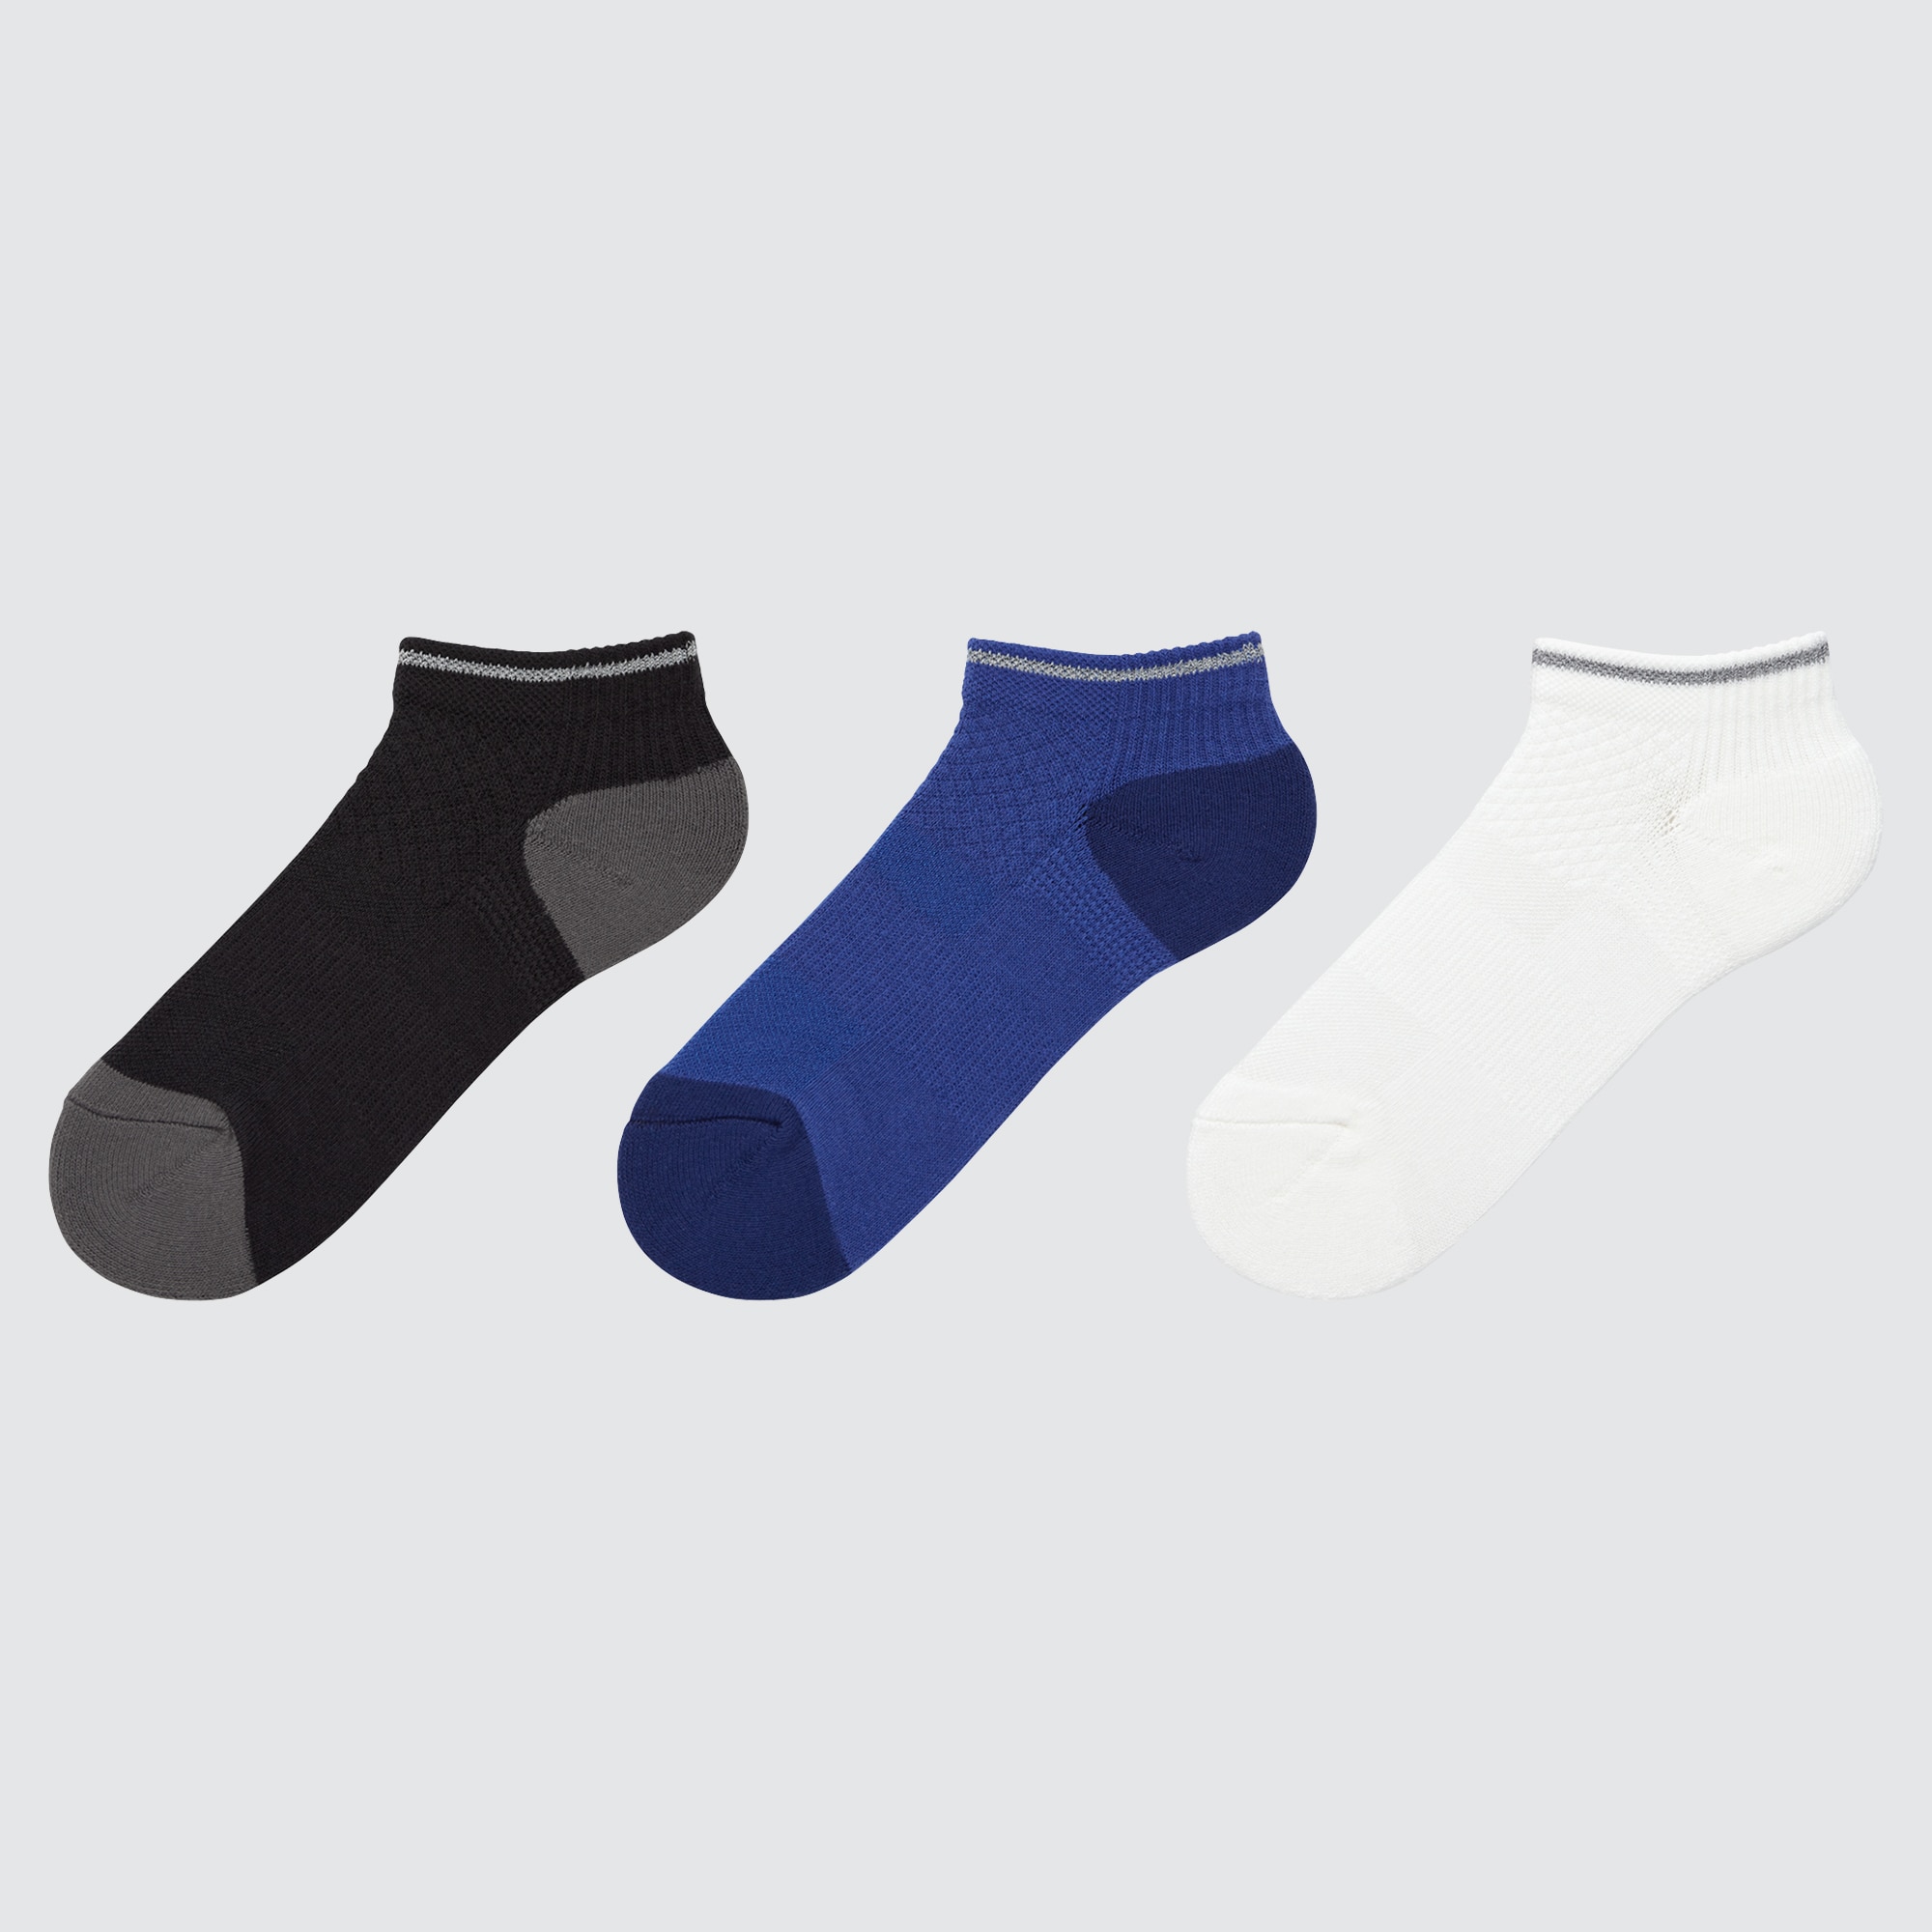 Носки UNIQLO 3 пары, темно-серый носки детские 3 пары tuosite tss1802 1 30 32 серый черный темно серый